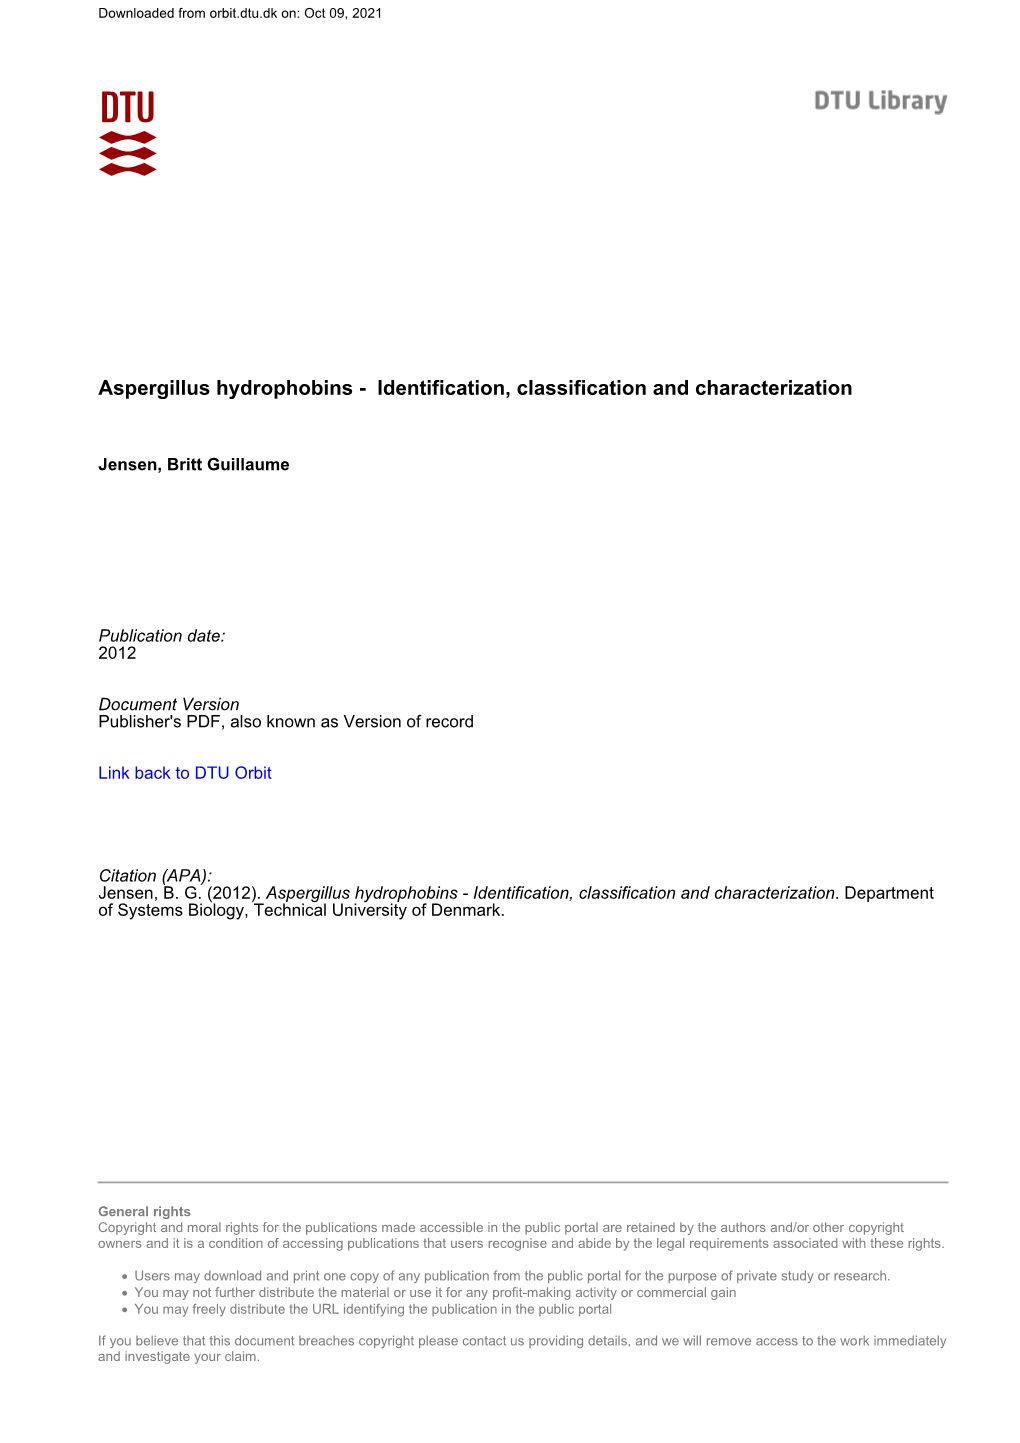 Aspergillus Hydrophobins - Identification, Classification and Characterization